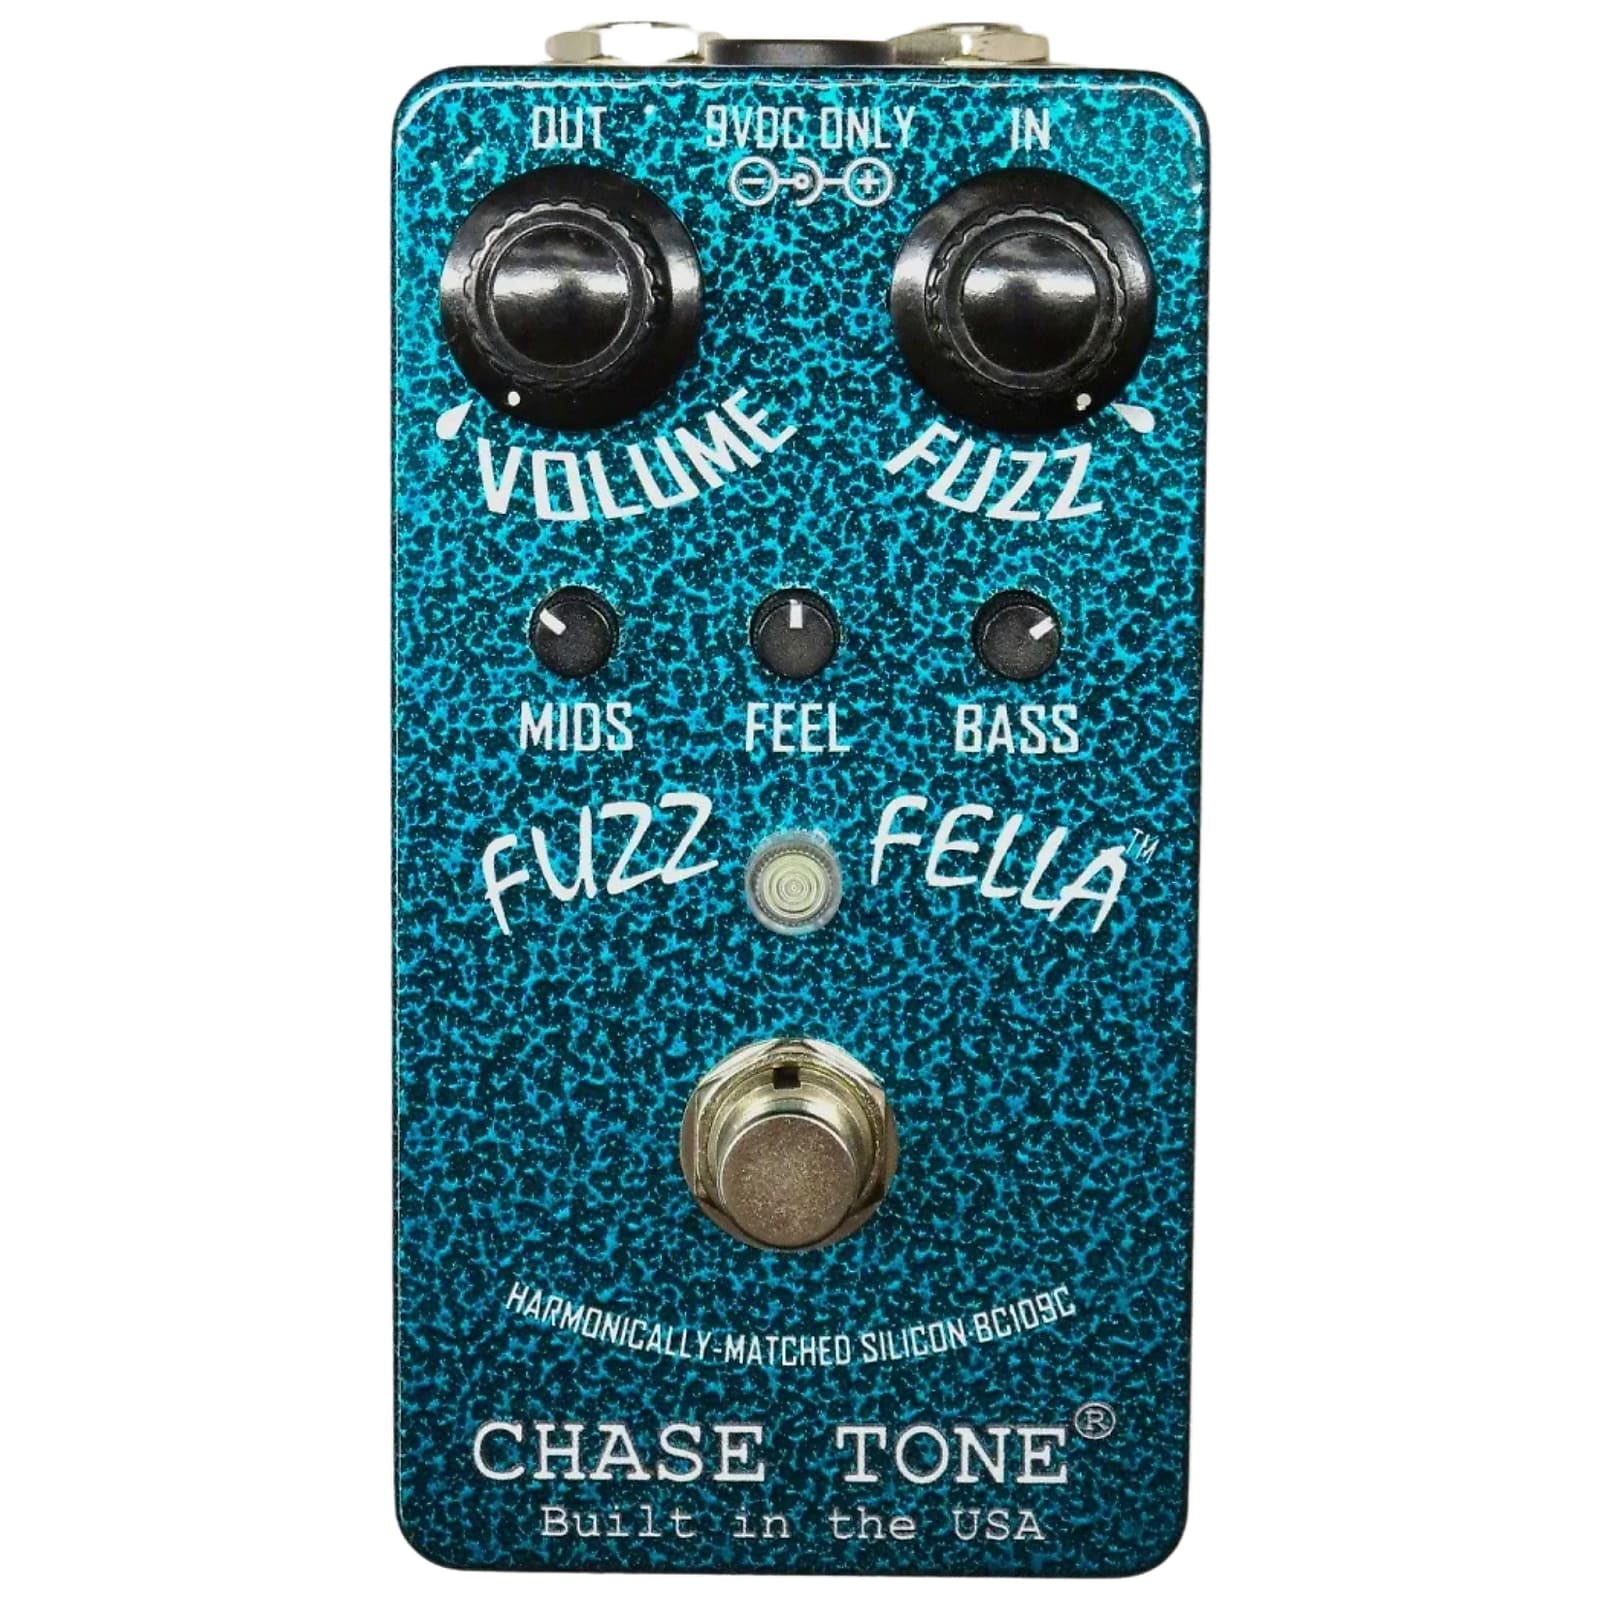 Chase Tone Fuzz Fella BC109C | Reverb Canada